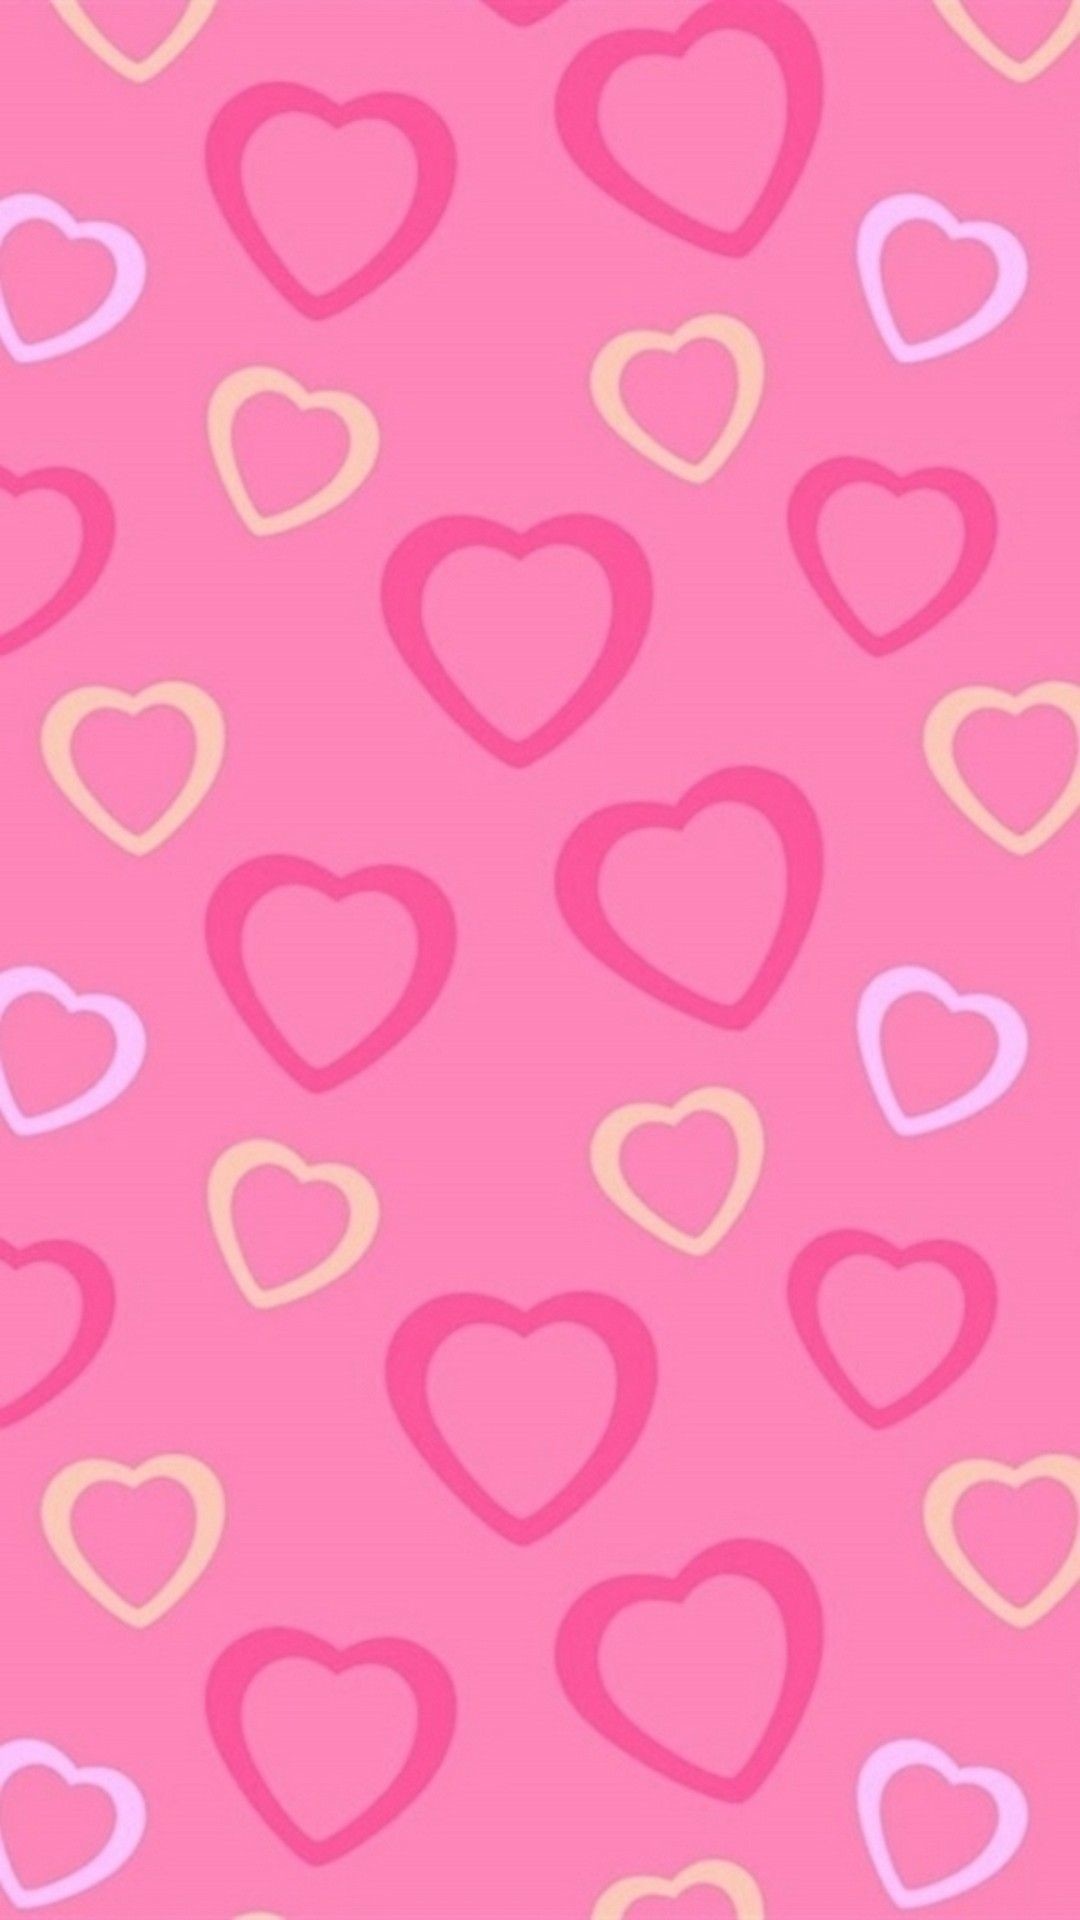 1080x1920 Cute Girly Heart Backgrounds